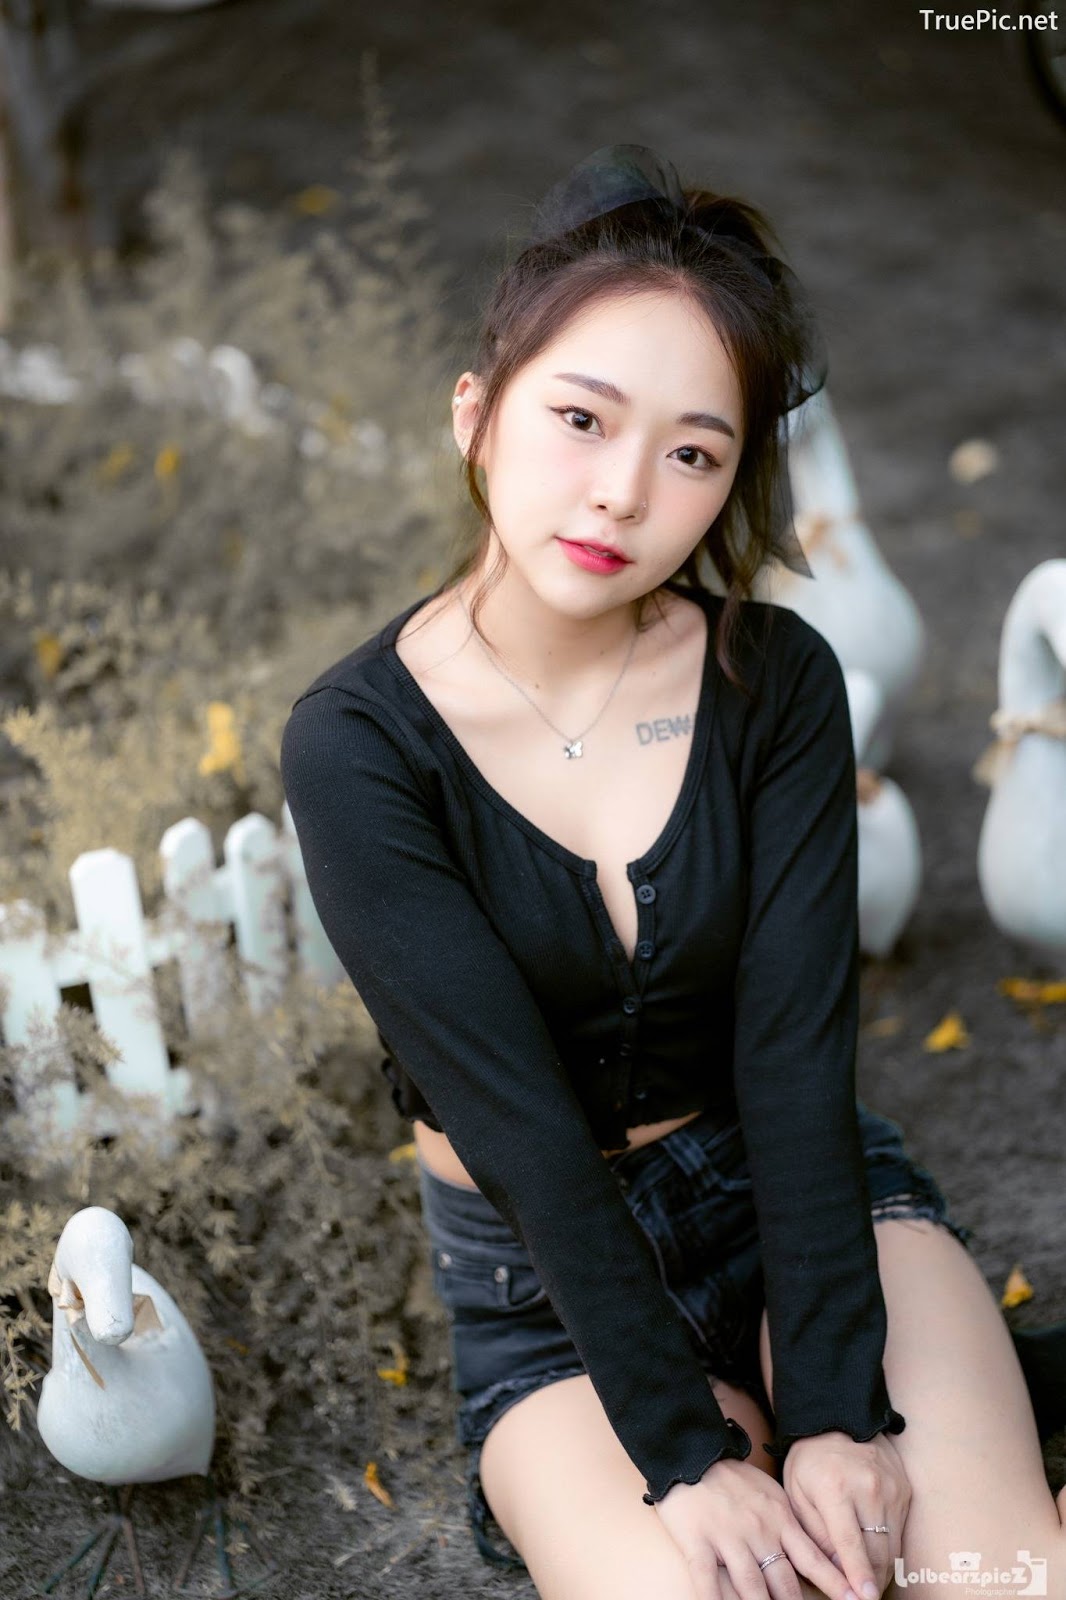 Image Thailand Model - Sunna Dewa - Cute Naughty Girl - TruePic.net - Picture-9